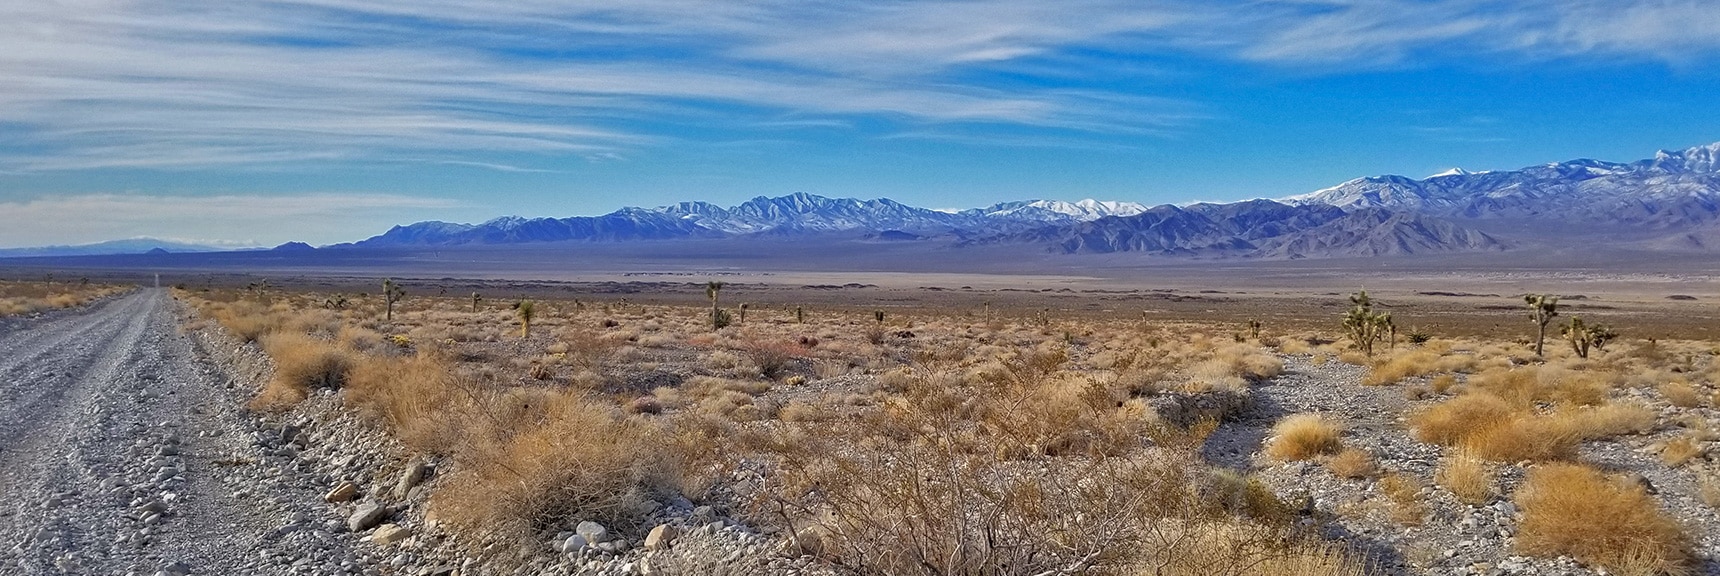 La Madre Mountains Wilderness from Alamo Road | Cow Camp Road | Sheep Range | Desert National Wildlife Refuge, Nevada